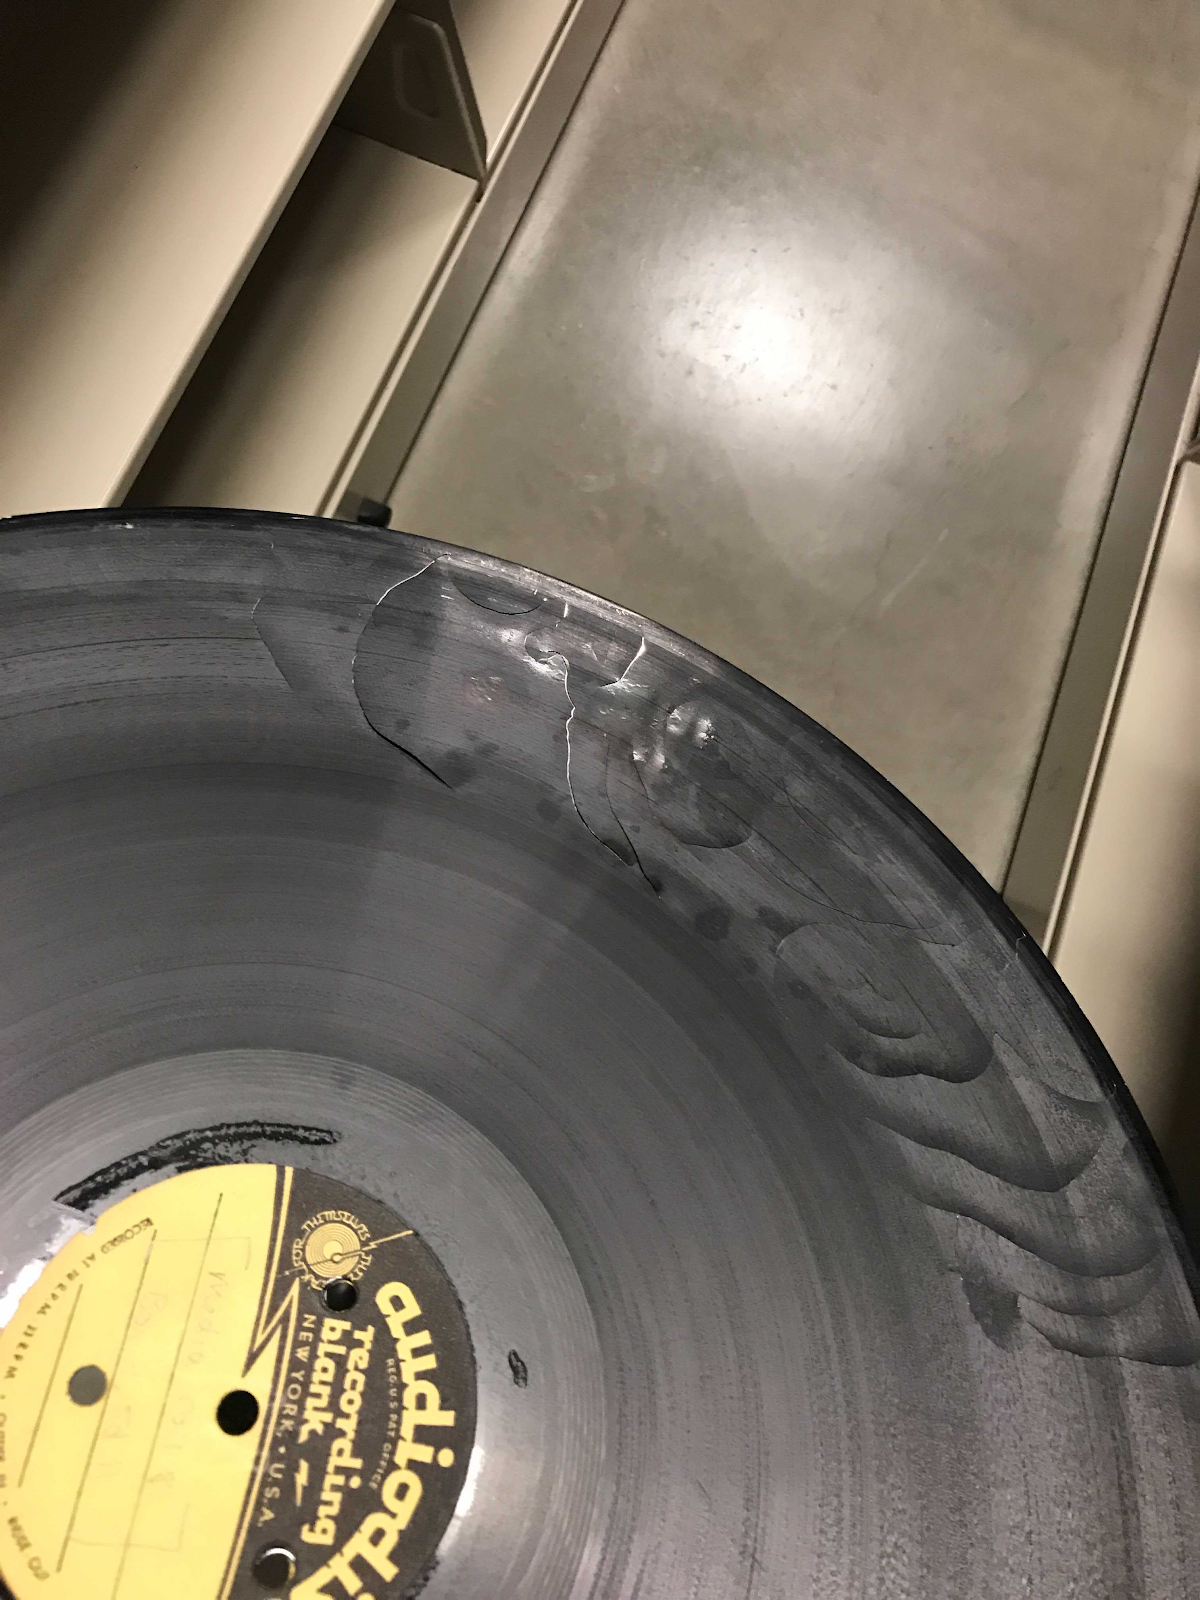 Image of damaged record